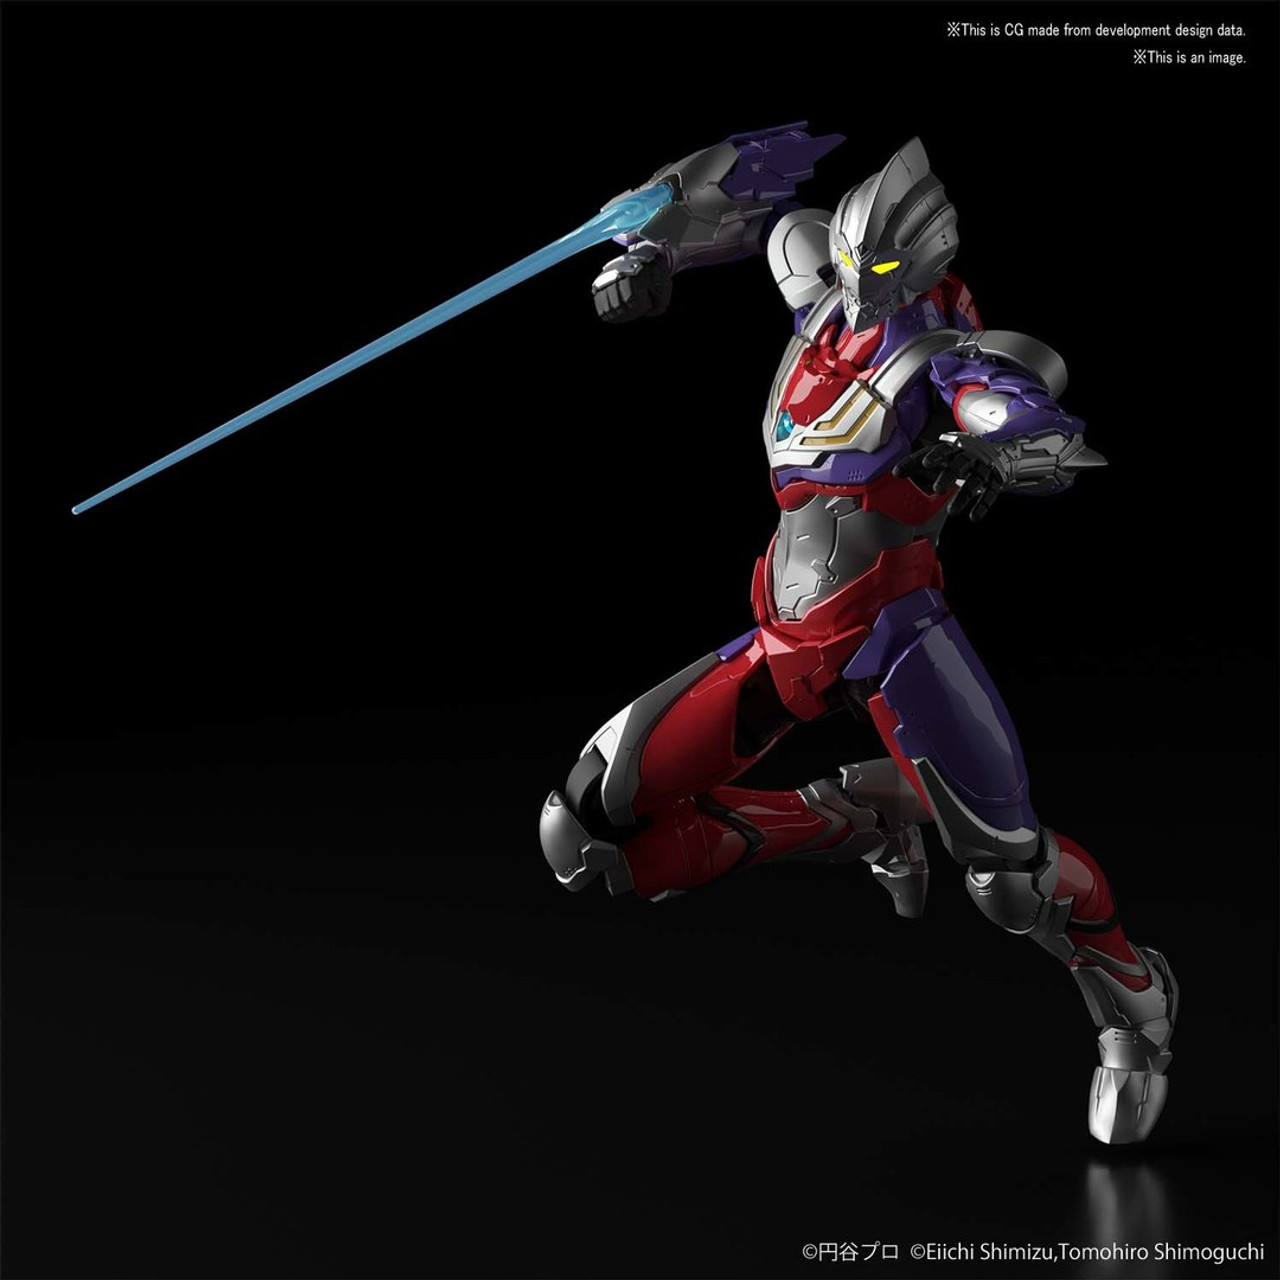 5058872 Ultraman Suit Tiga "Ultraman", Bandai Spirits Figure-rise Standard